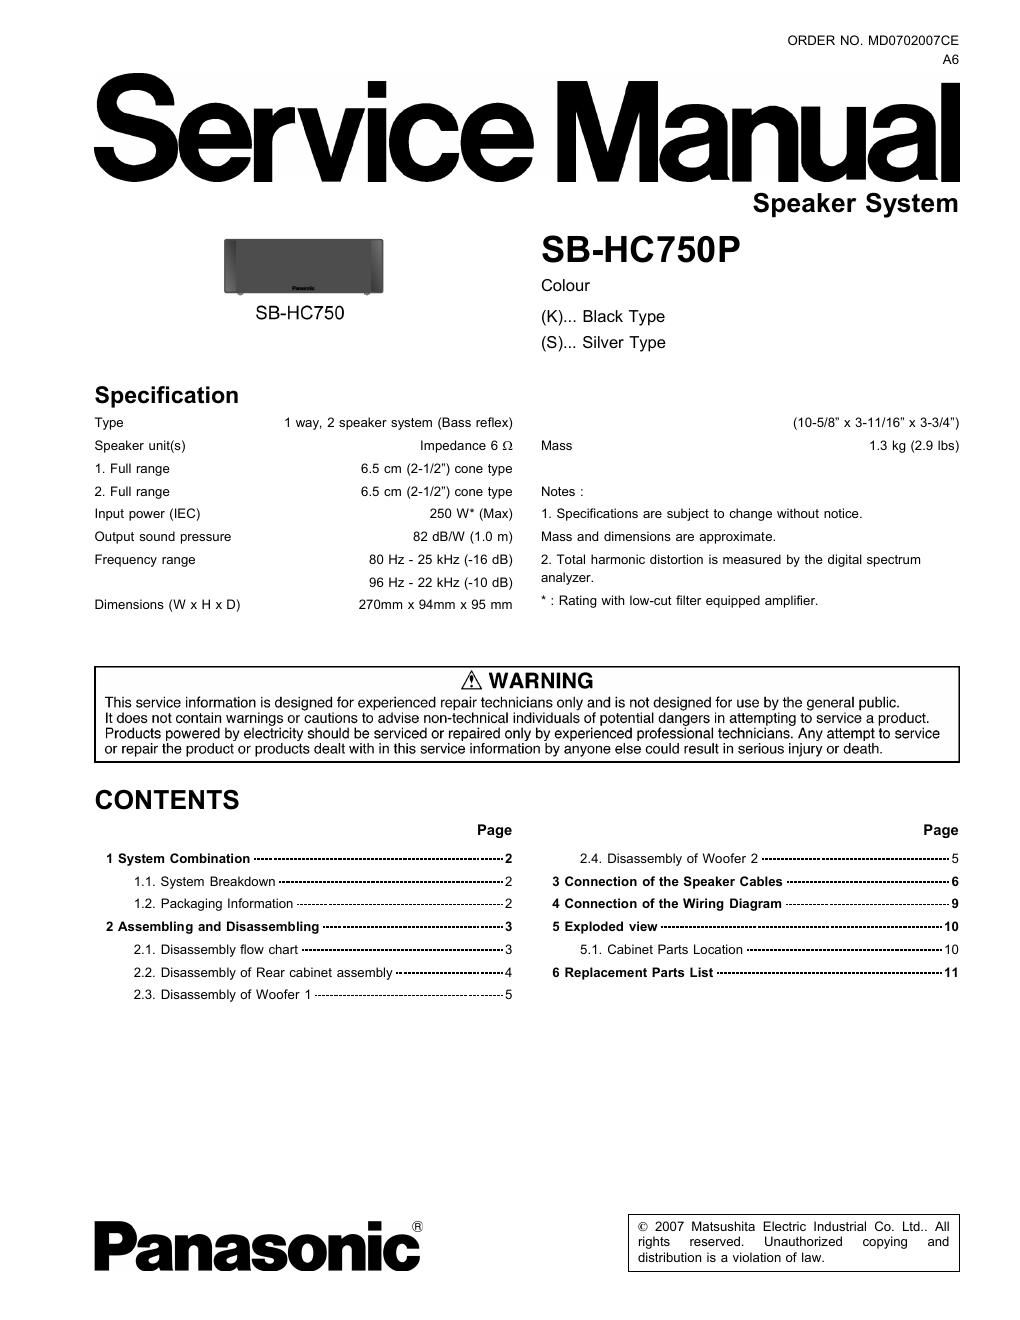 panasonic sb hc 750 p service manual